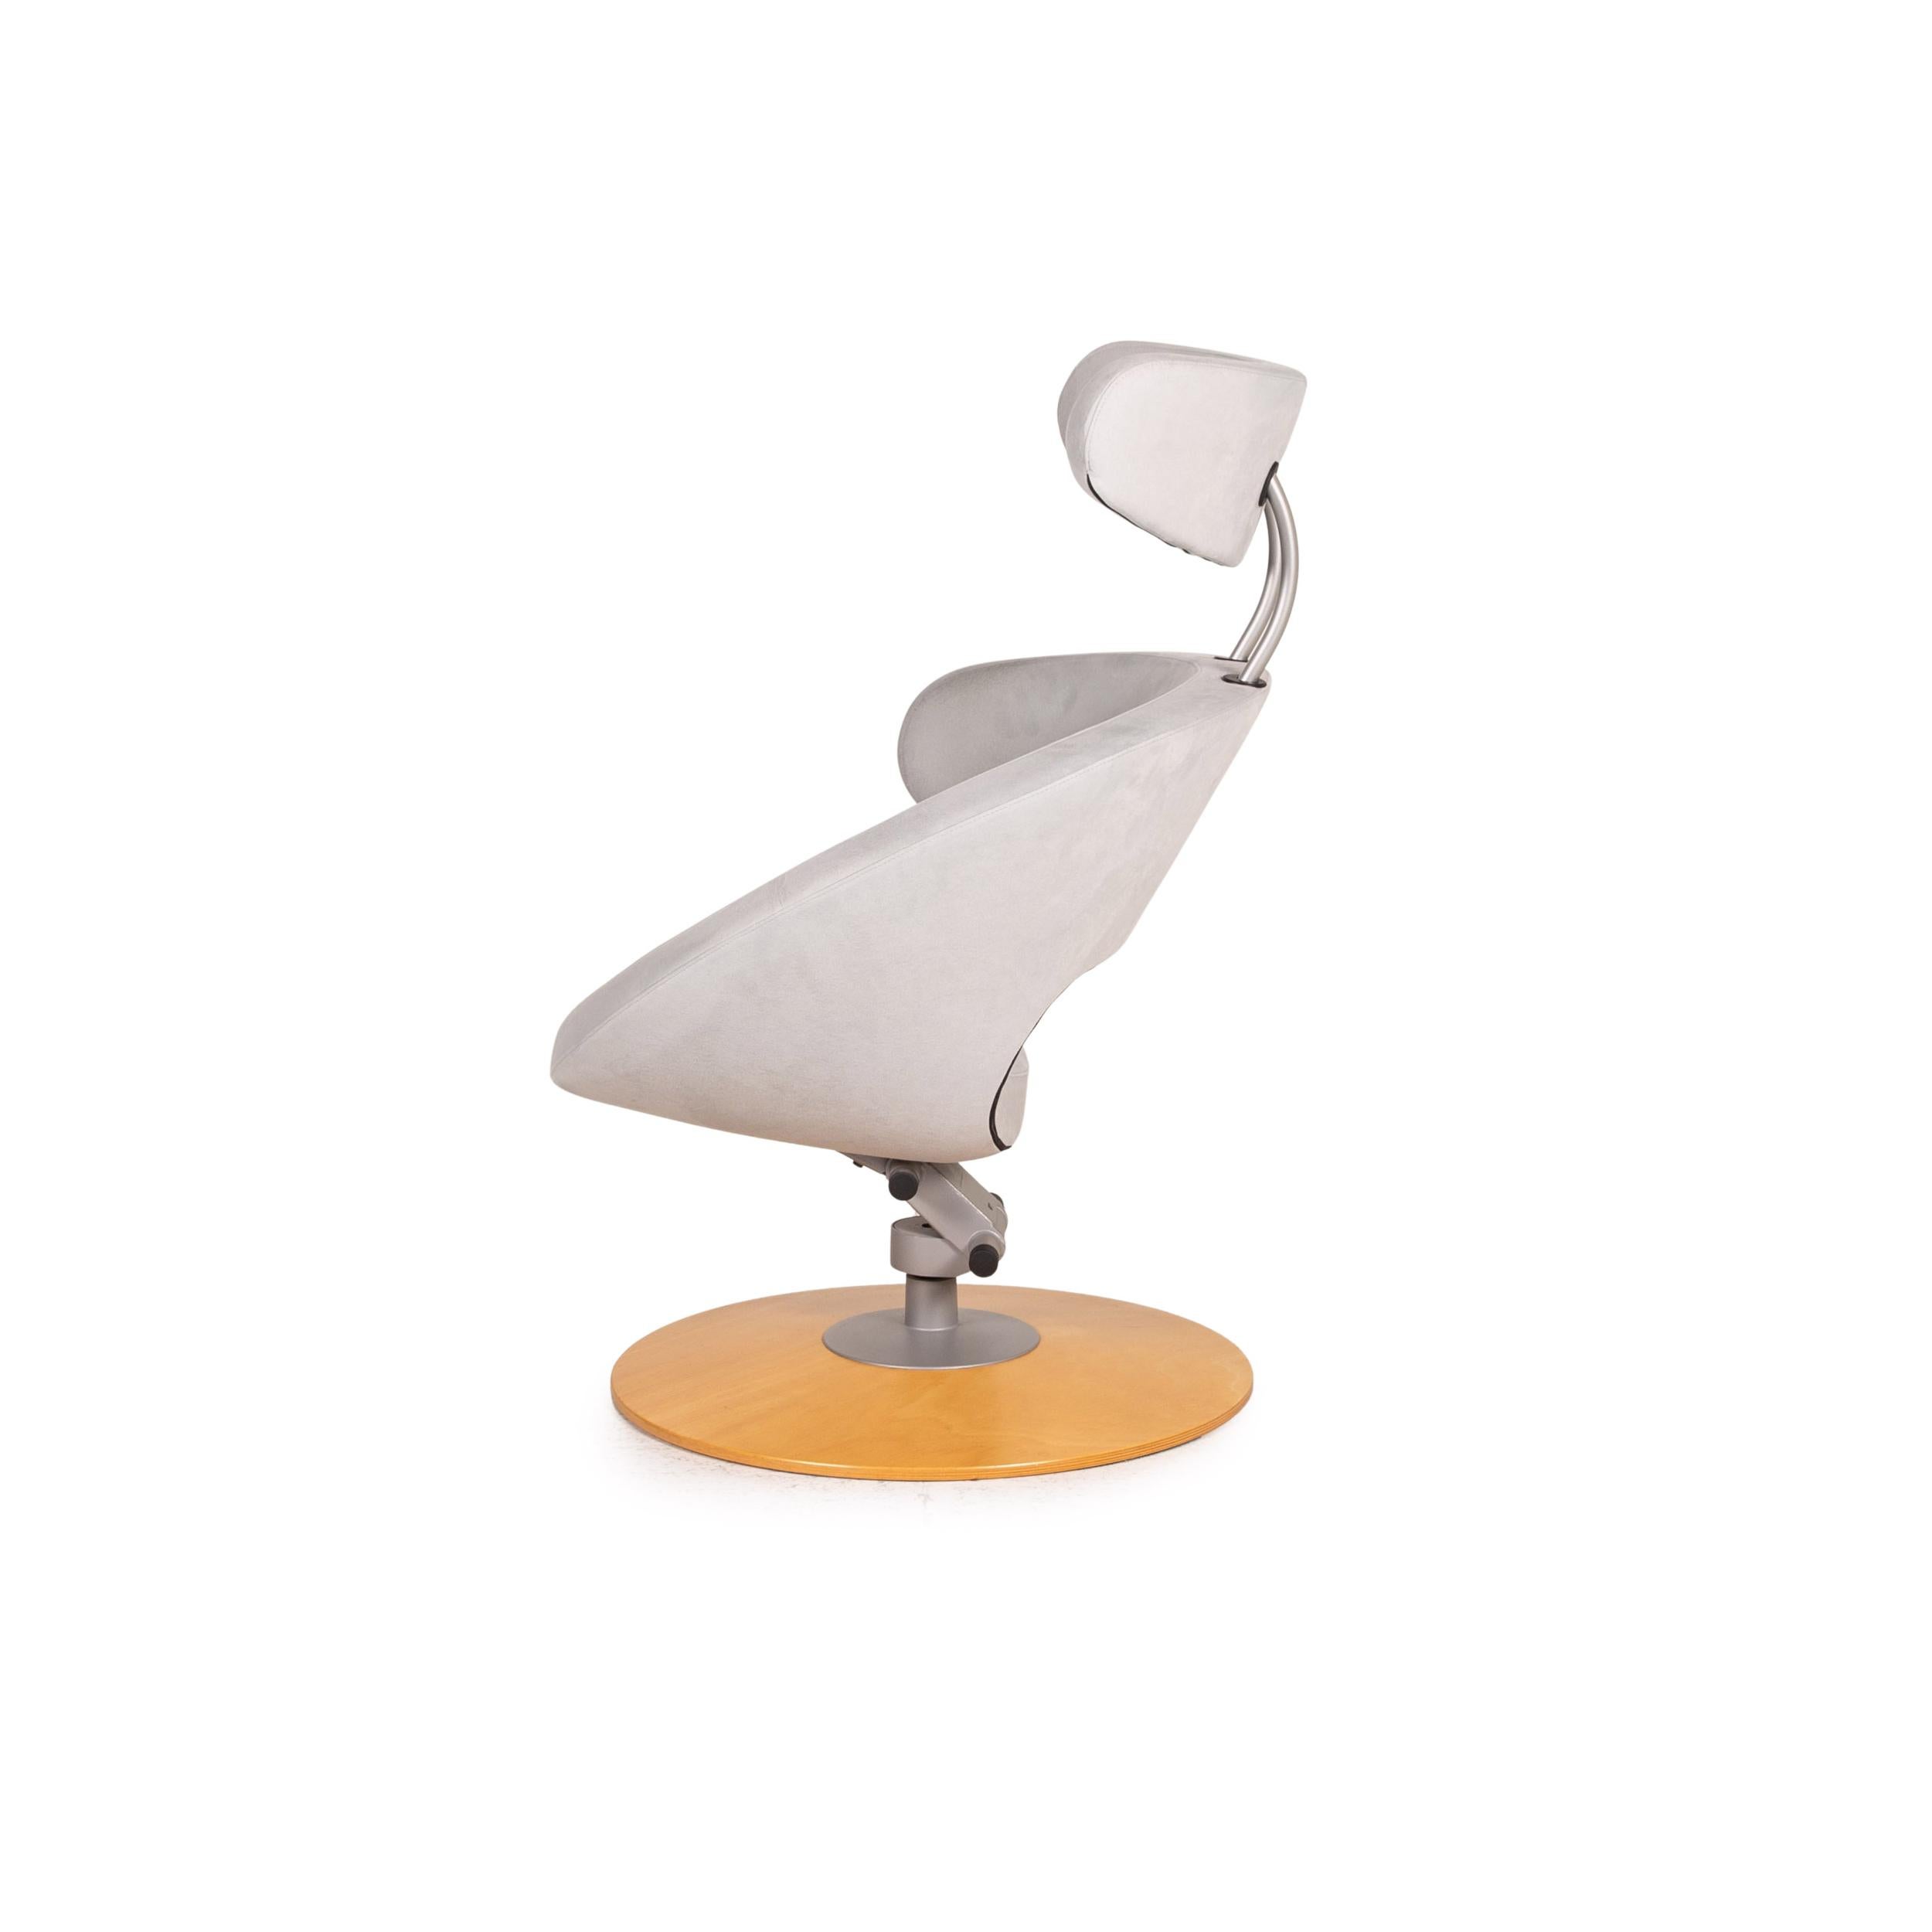 Stokke Peel II fabric armchair incl. Stool gray function headrest 4